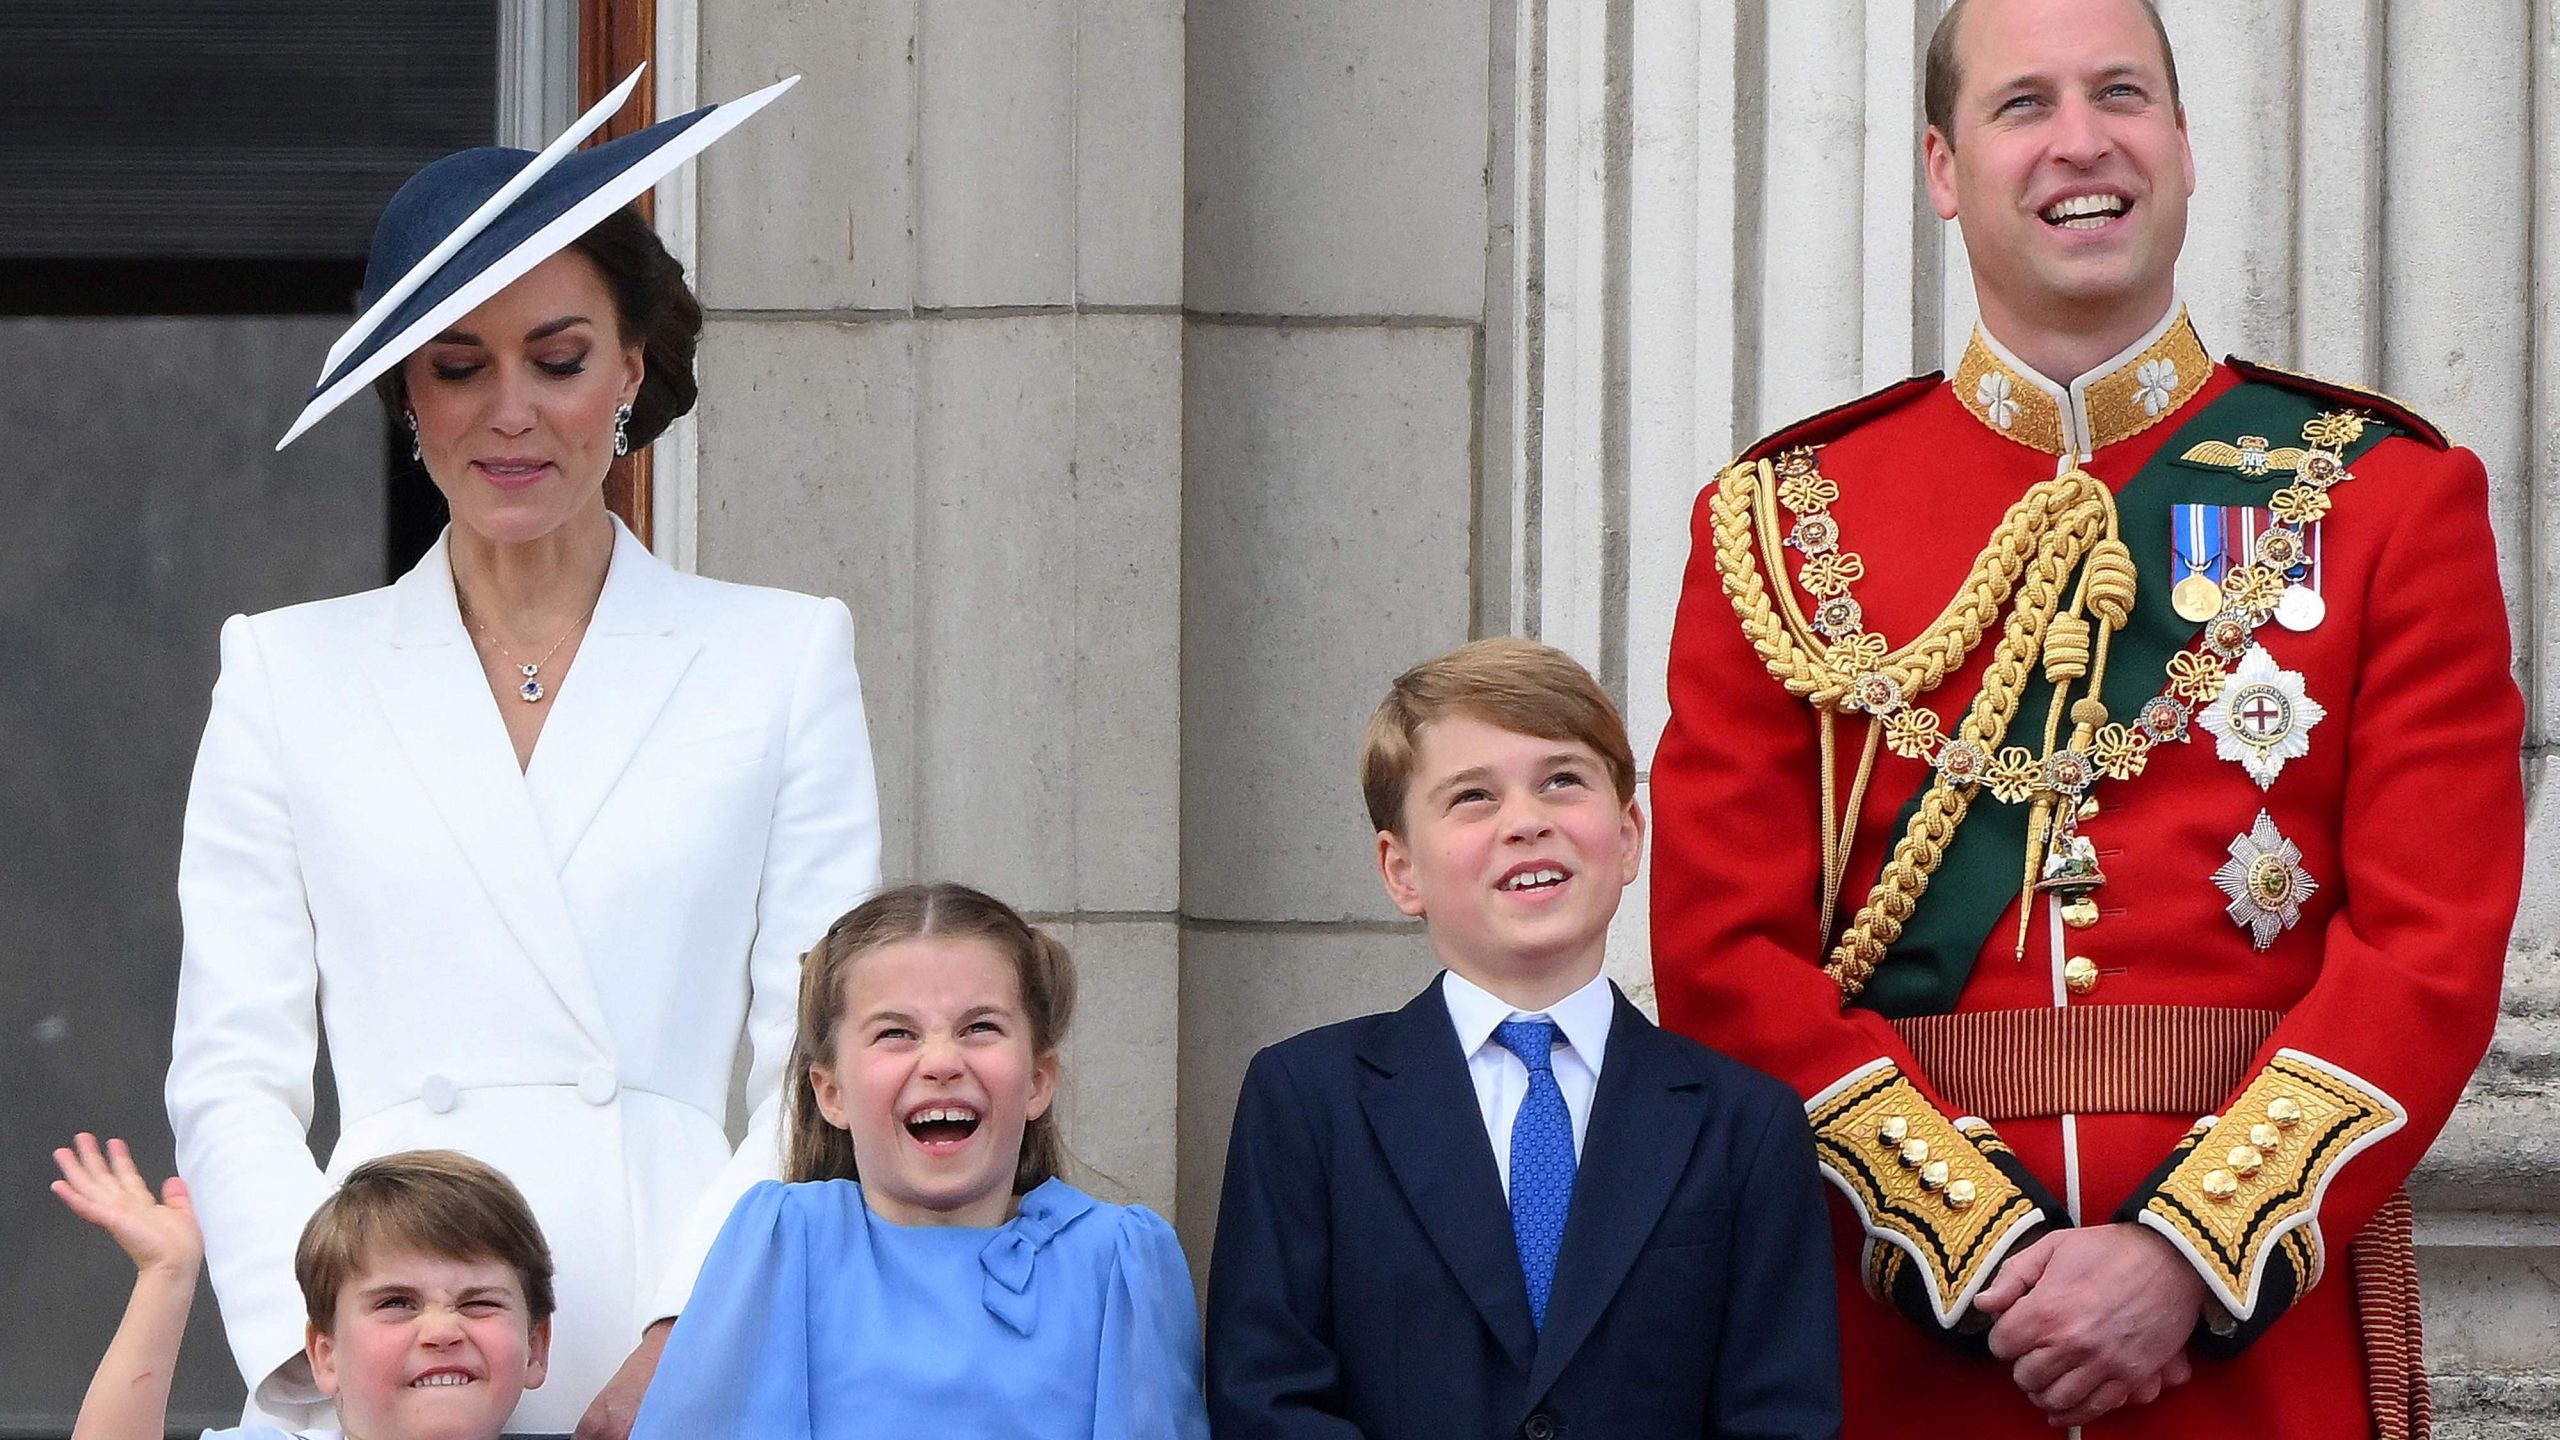 2020BAFTA BEAT DRESS|凯特王妃和威廉王子现身2020年英国电影学院奖